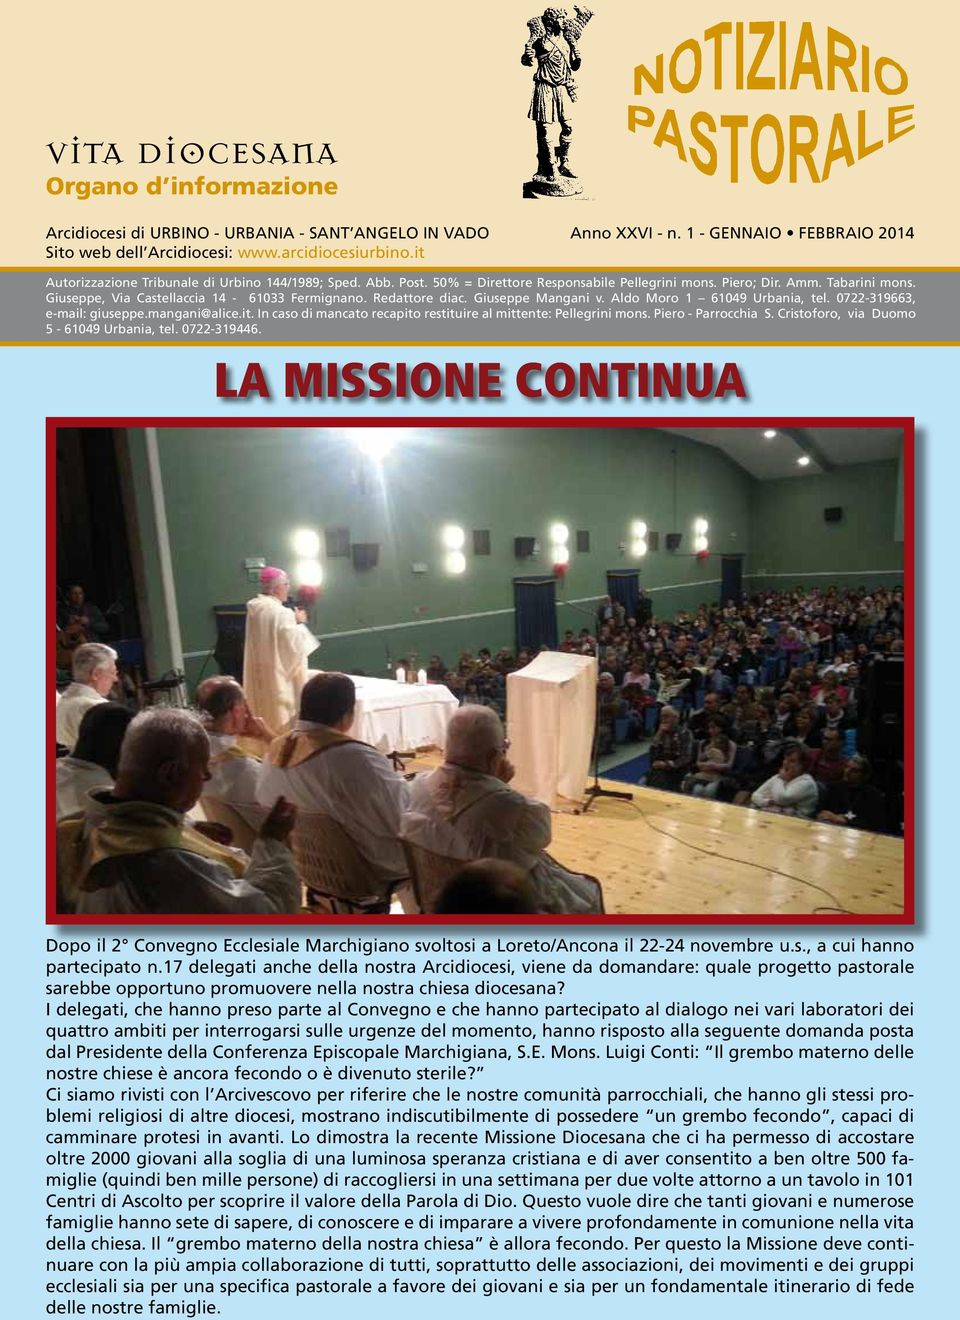 Giuseppe, Via Castellaccia 14-61033 Fermignano. Redattore diac. Giuseppe Mangani v. Aldo Moro 1 61049 Urbania, tel. 0722-319663, e-mail: giuseppe.mangani@alice.it.